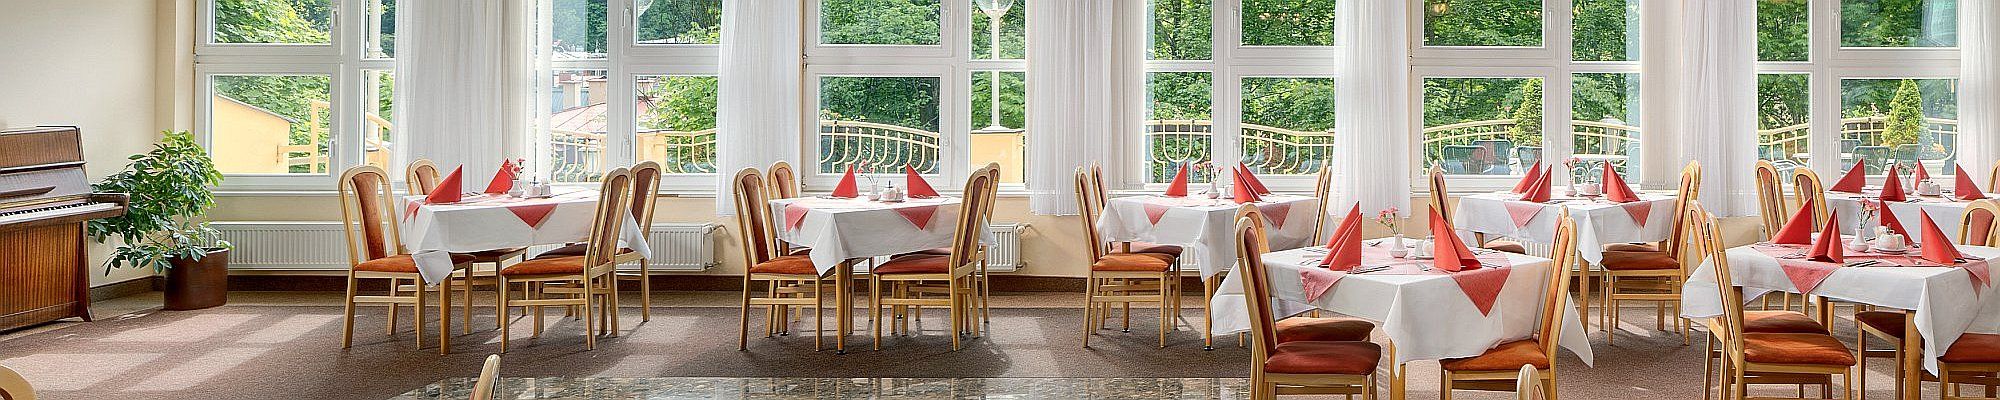 Vltava Ensana Health Spa Hotel - Restaurant